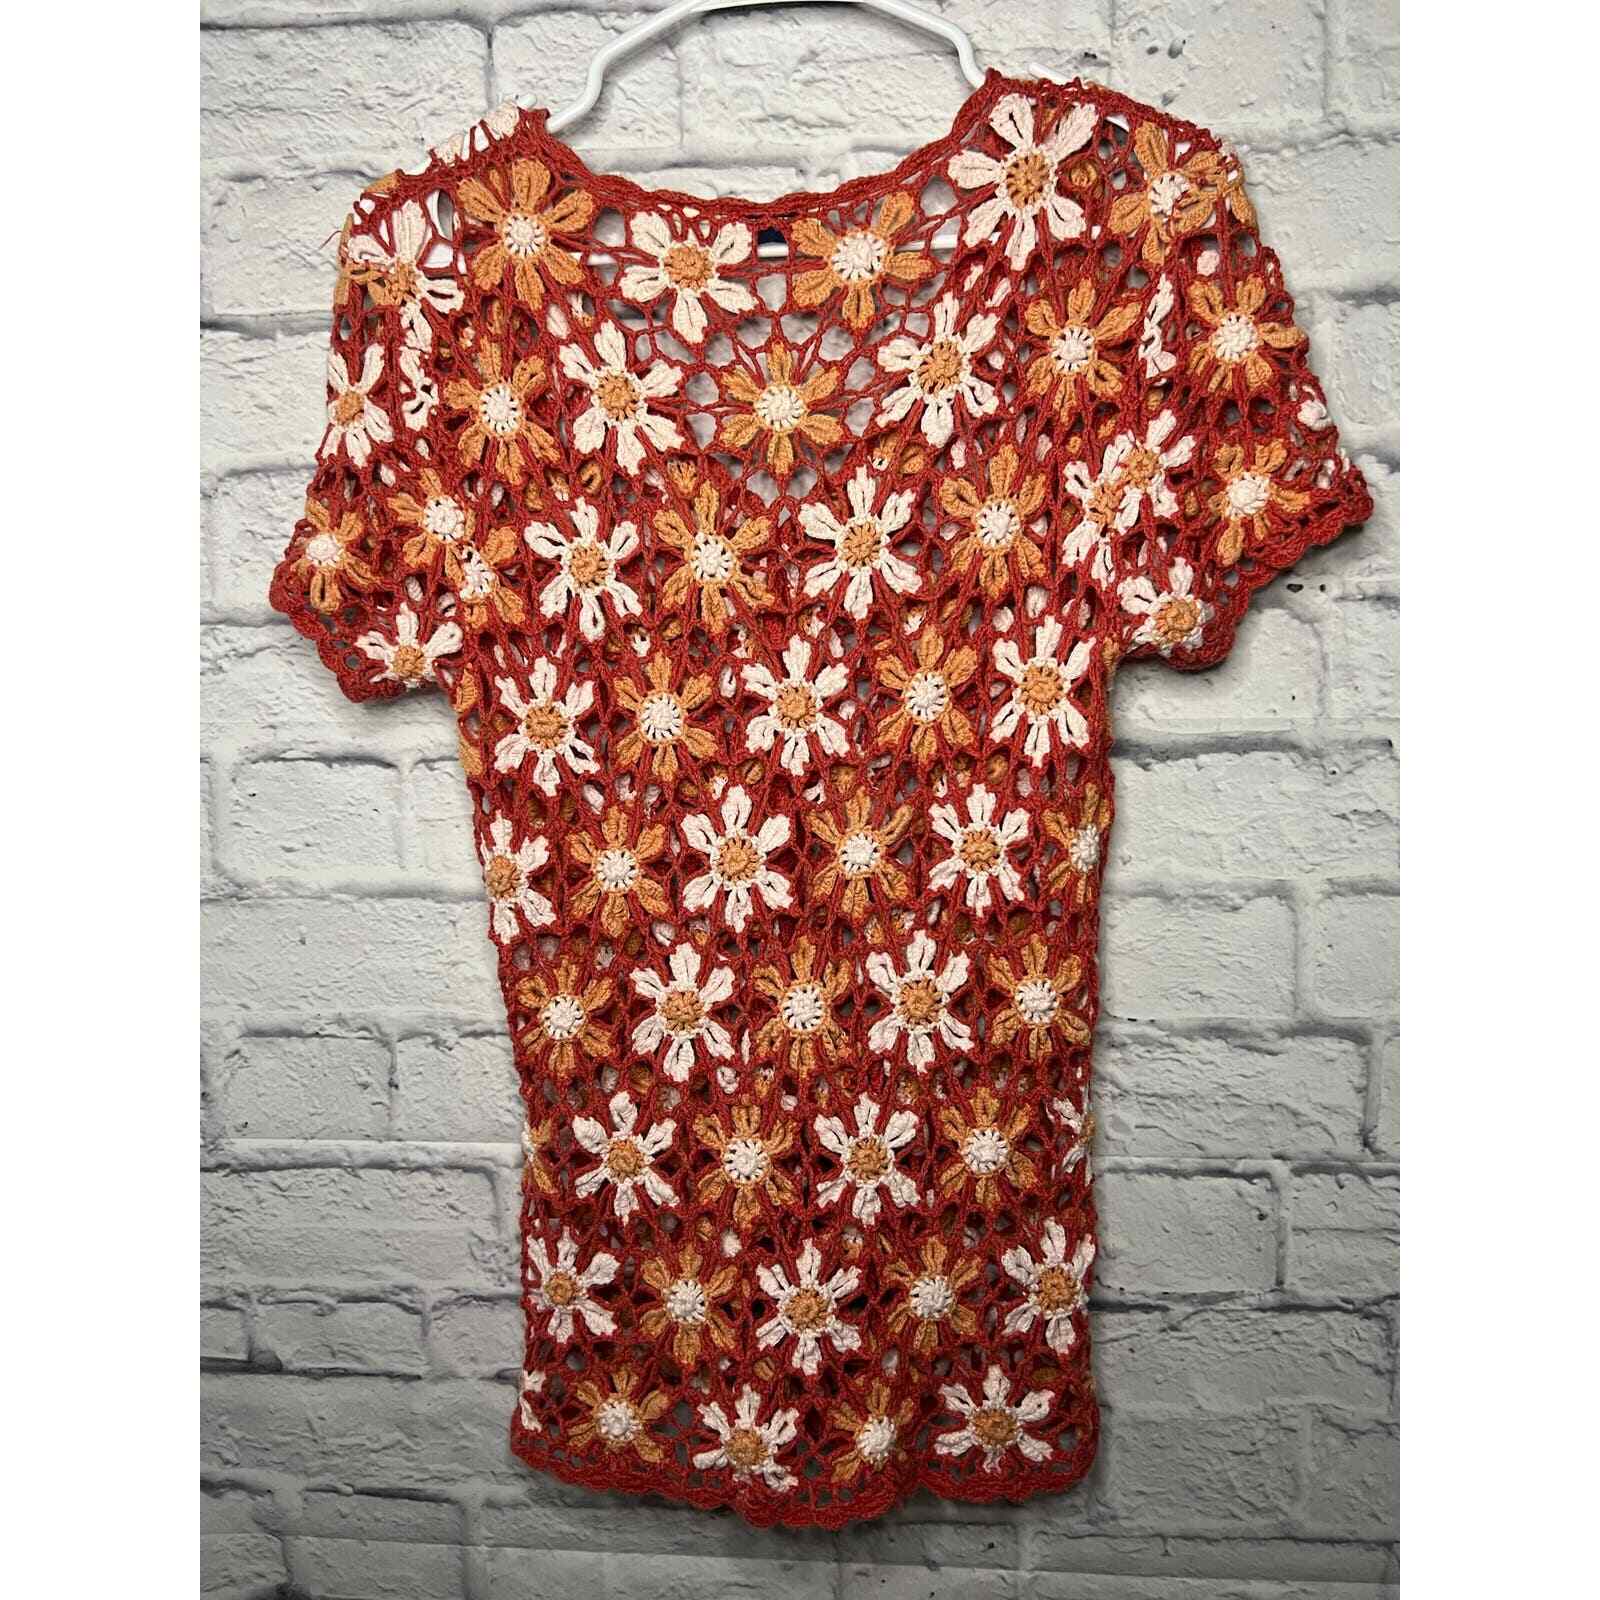 White Stag 90s vintage floral crochet top size M. - image 6